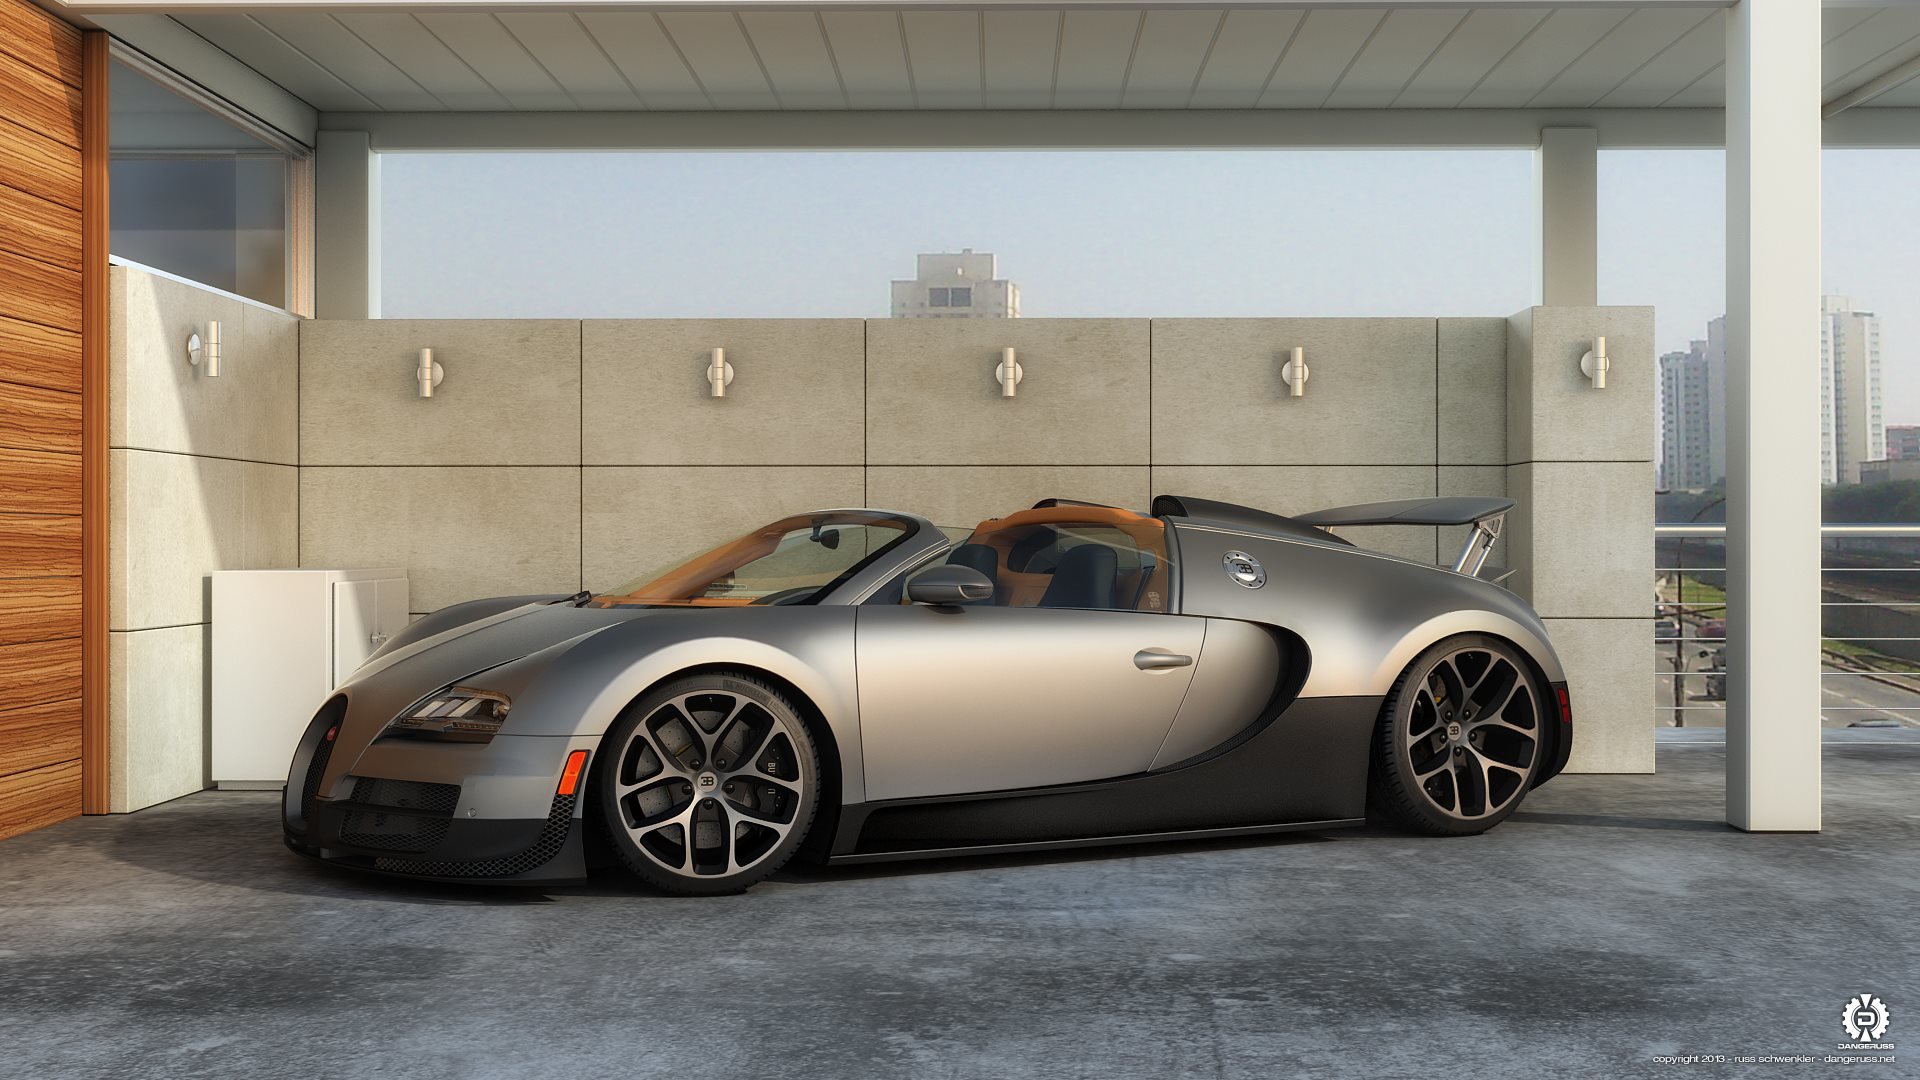 Download full hd 1920x1080 Bugatti Veyron desktop background ID:297969 for free